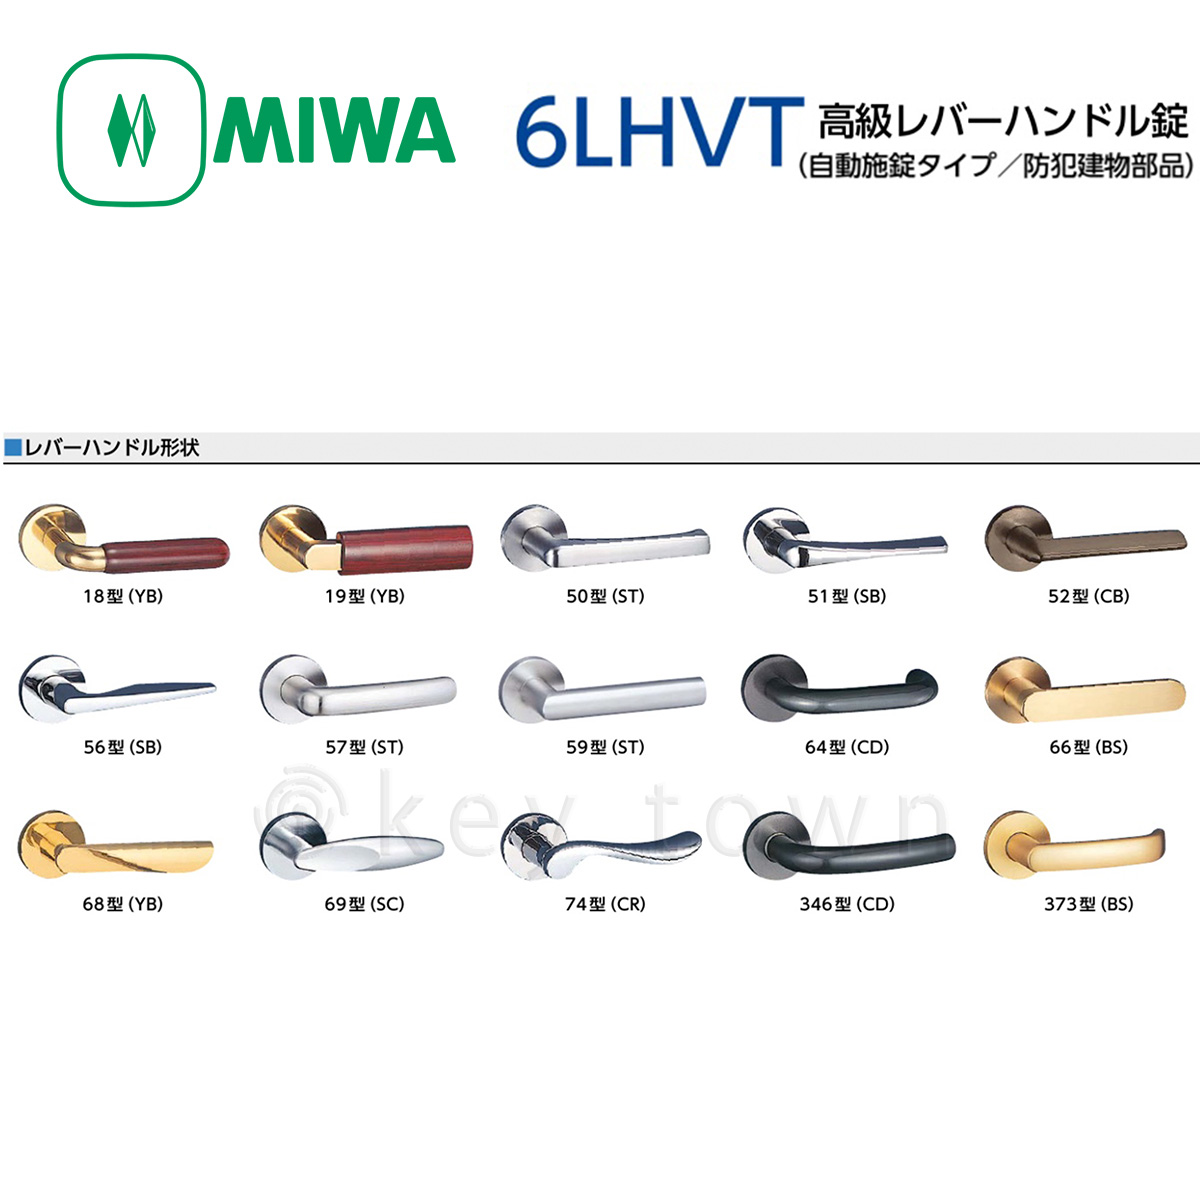 MIWA 【美和ロック】 高級レバーハンドル錠 [MIWA-6LHVT] 交換用[MIWA6LHVT]｜鍵・シリンダーの格安ネット通販【鍵TOWN】